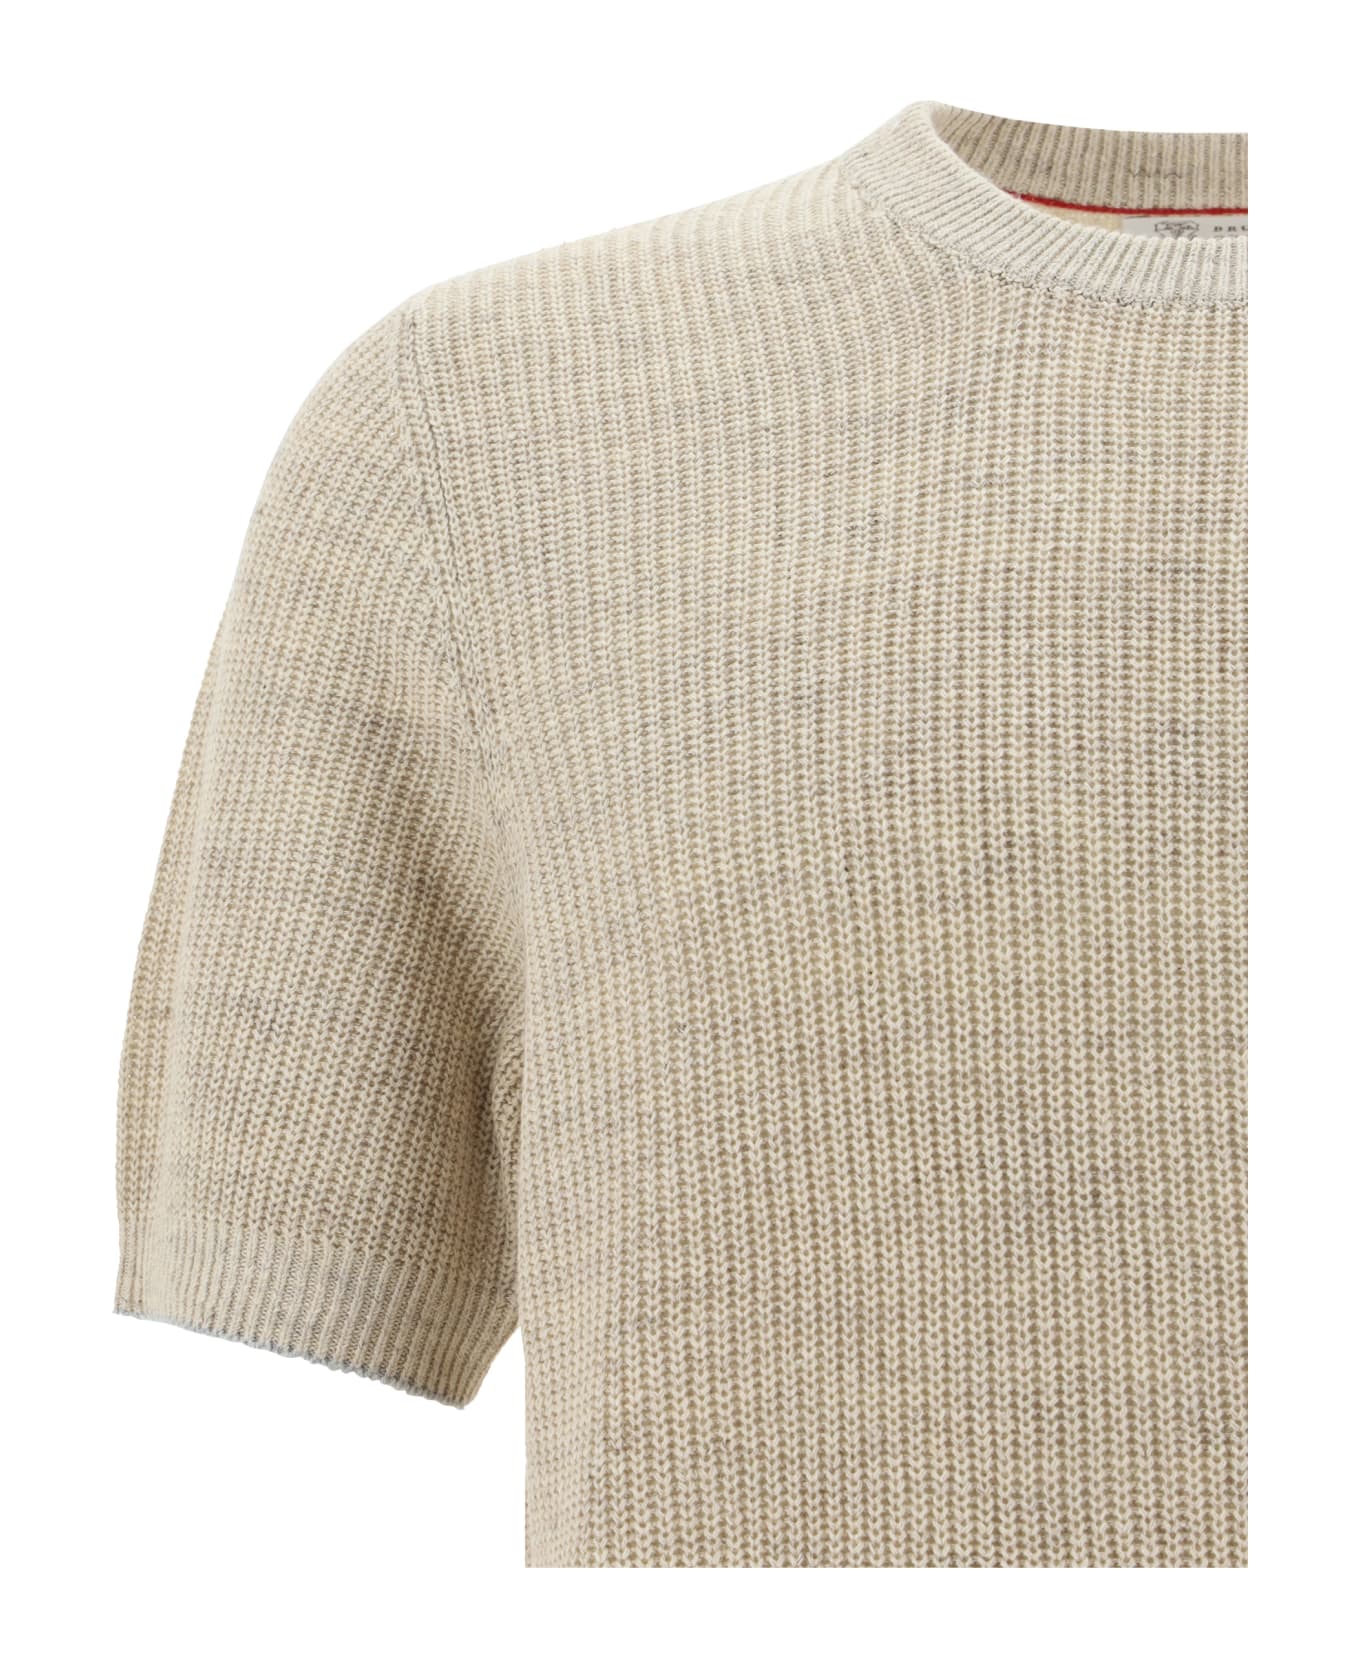 Brunello Cucinelli Linen T-shirt - Oyster+grigio Chiaro ニットウェア